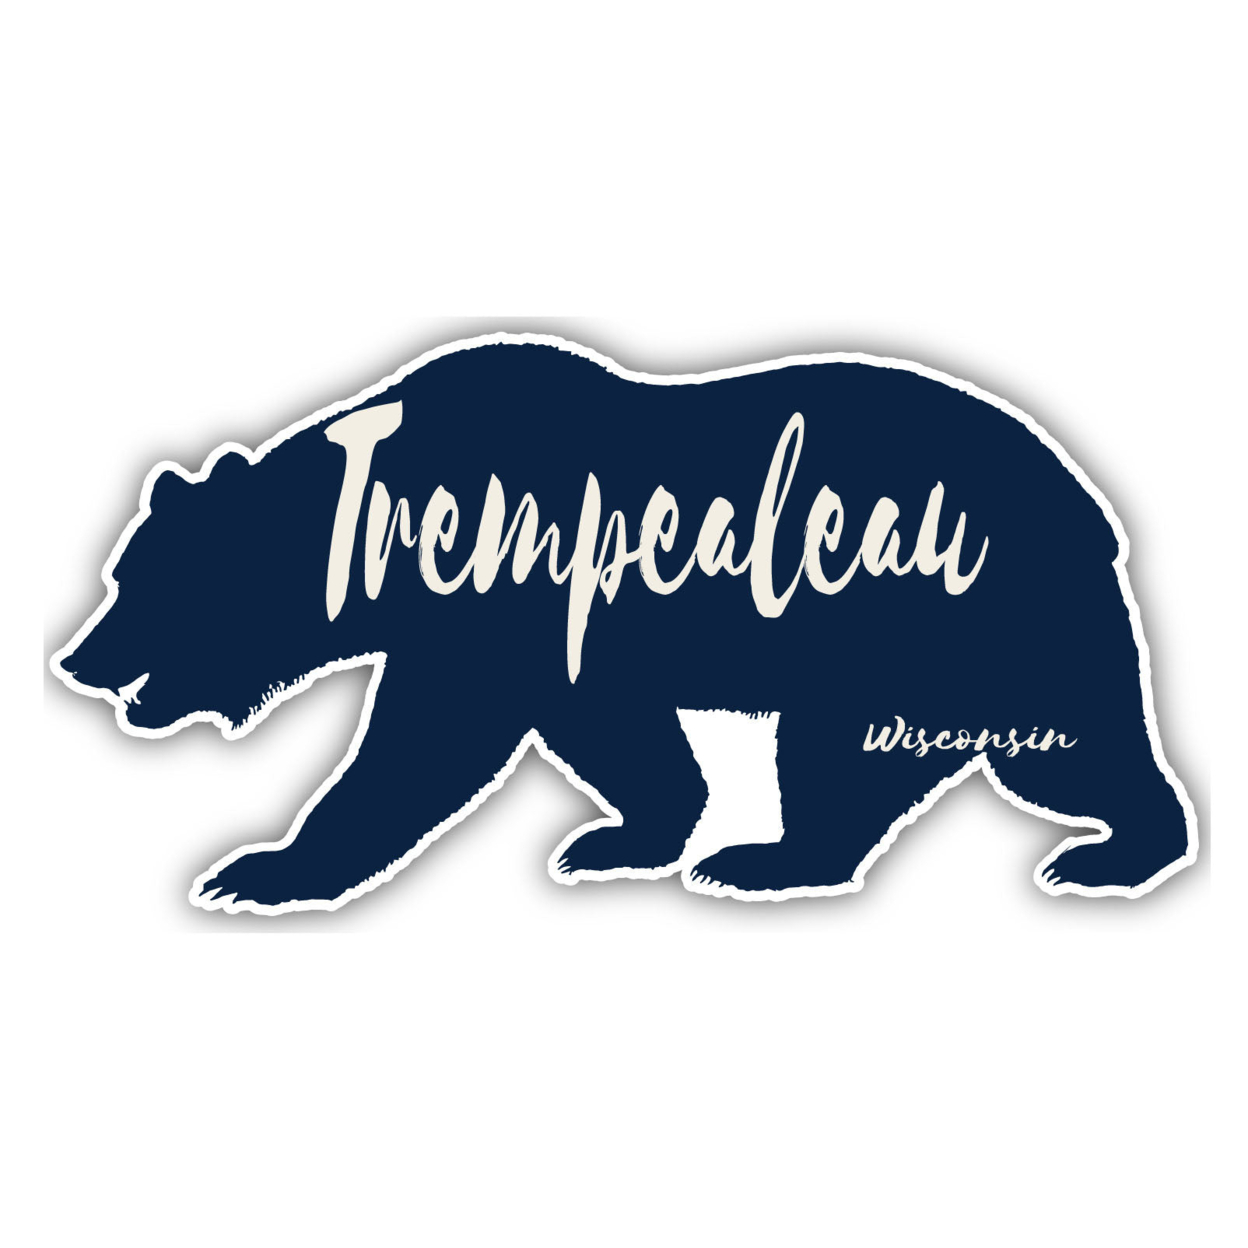 Trempealeau Wisconsin Souvenir Decorative Stickers (Choose Theme And Size) - Single Unit, 4-Inch, Bear